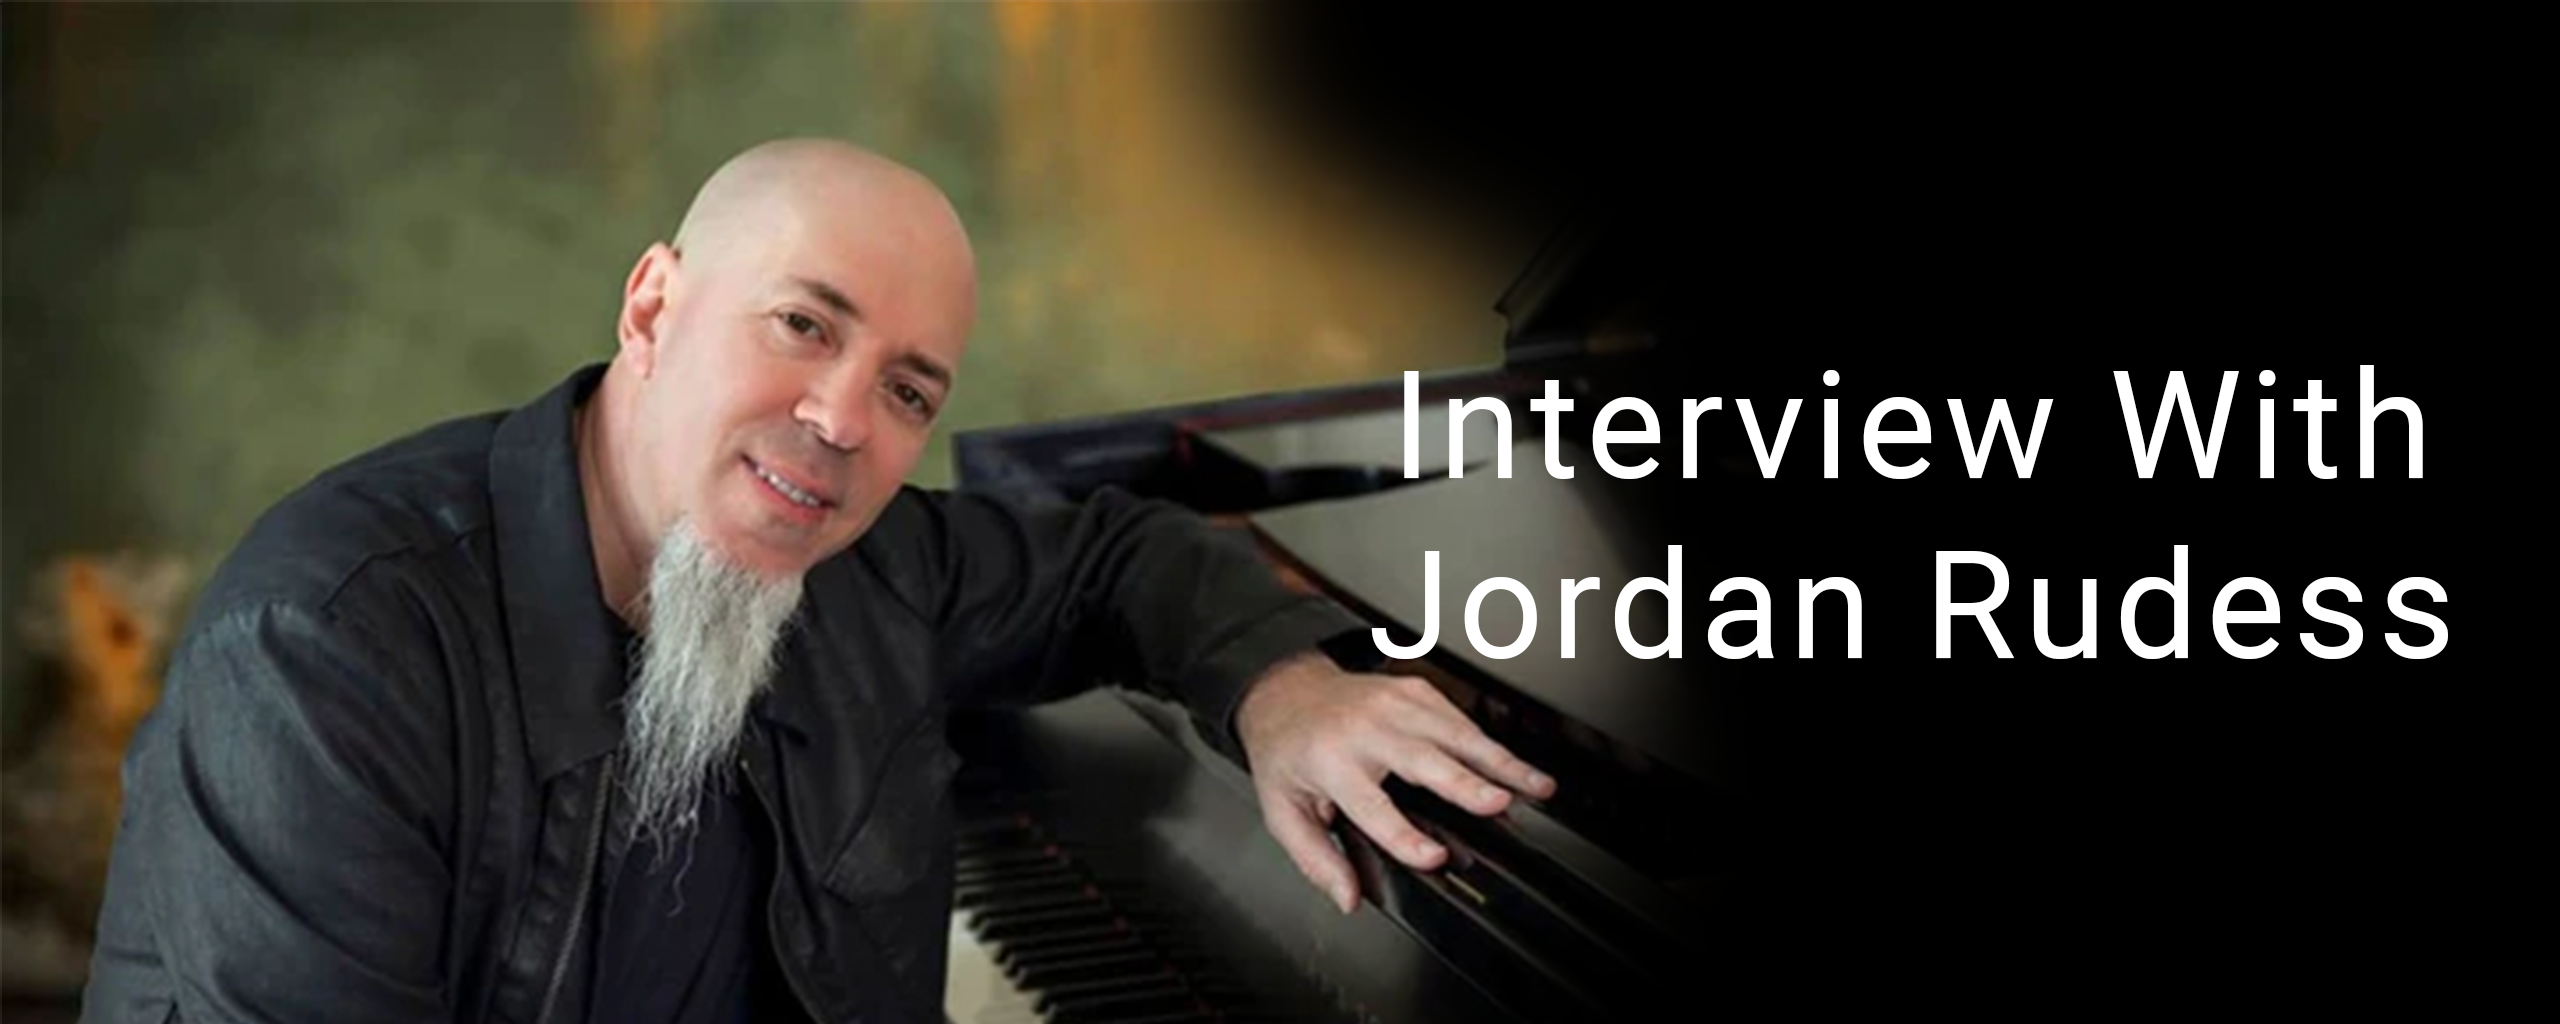 Interview with Jordan Rudess